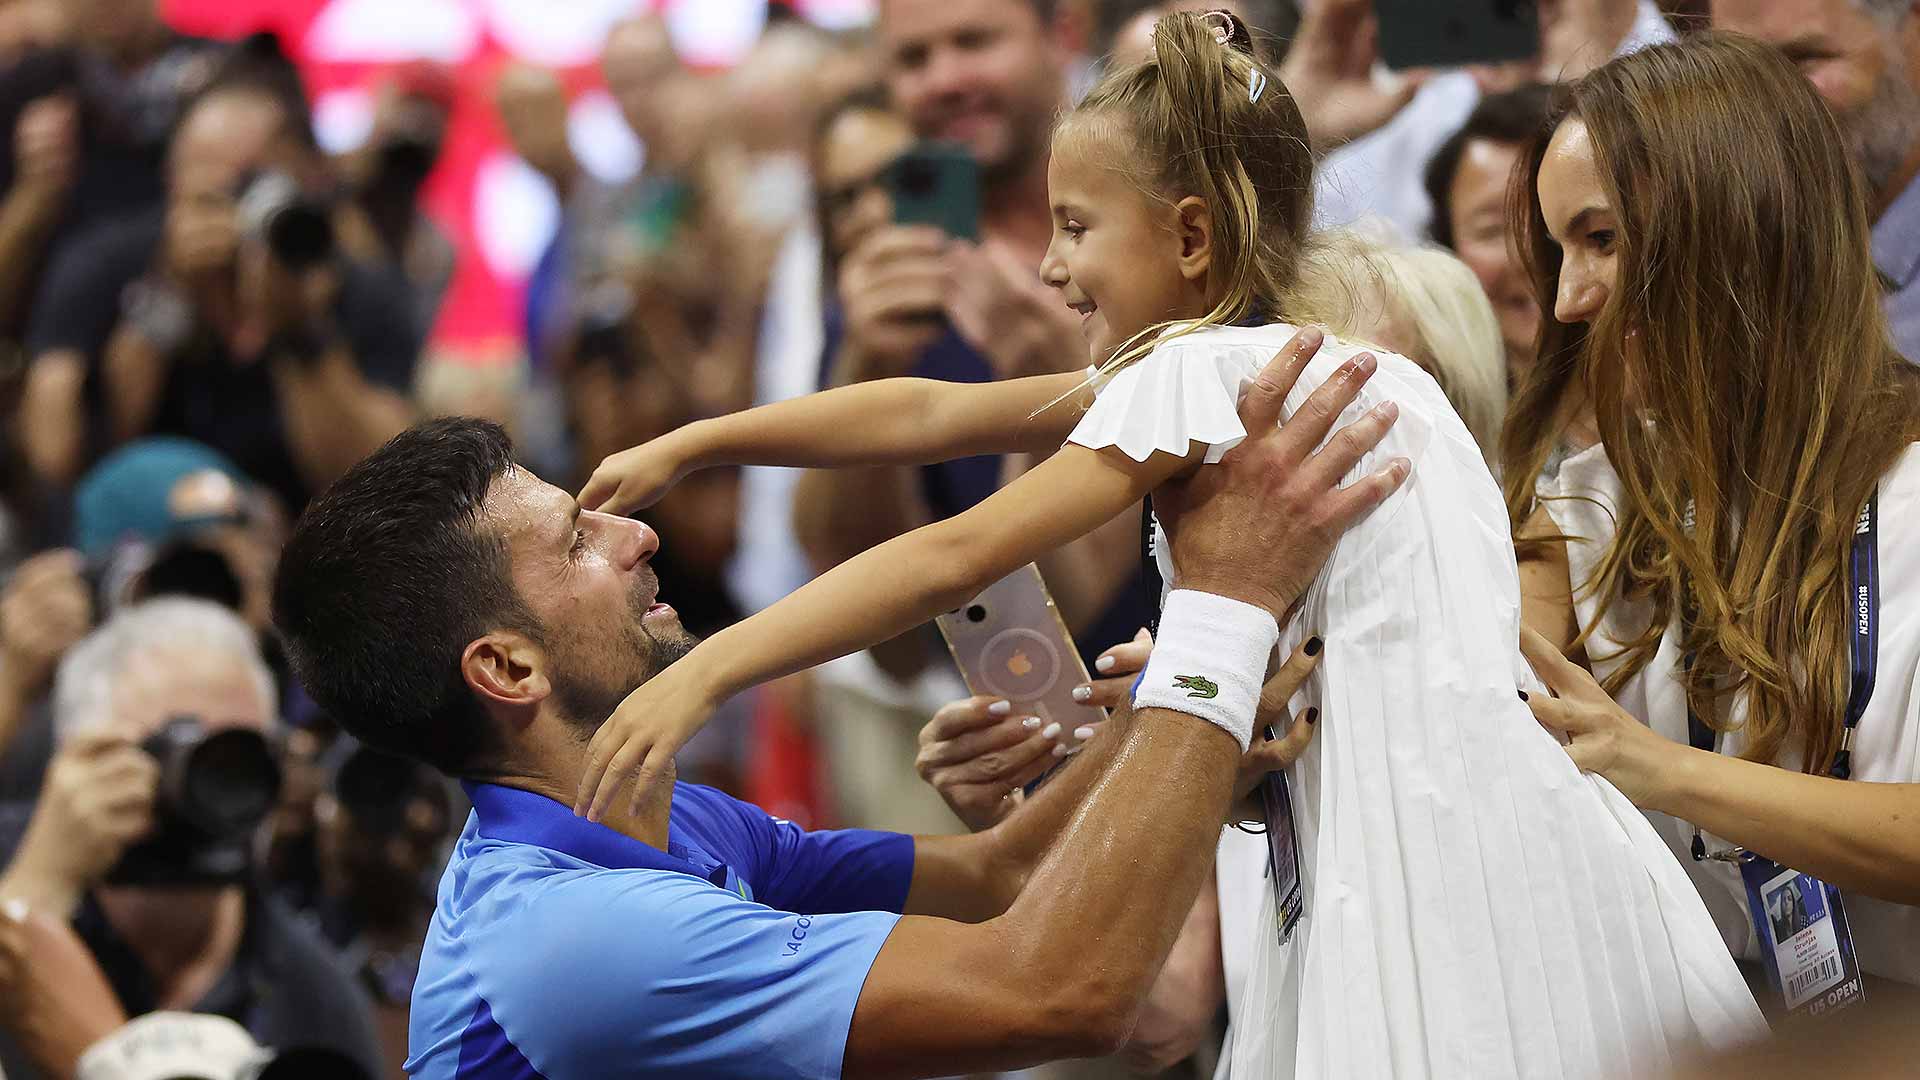 Novak Djokovic starts his - US Open Tennis Championships